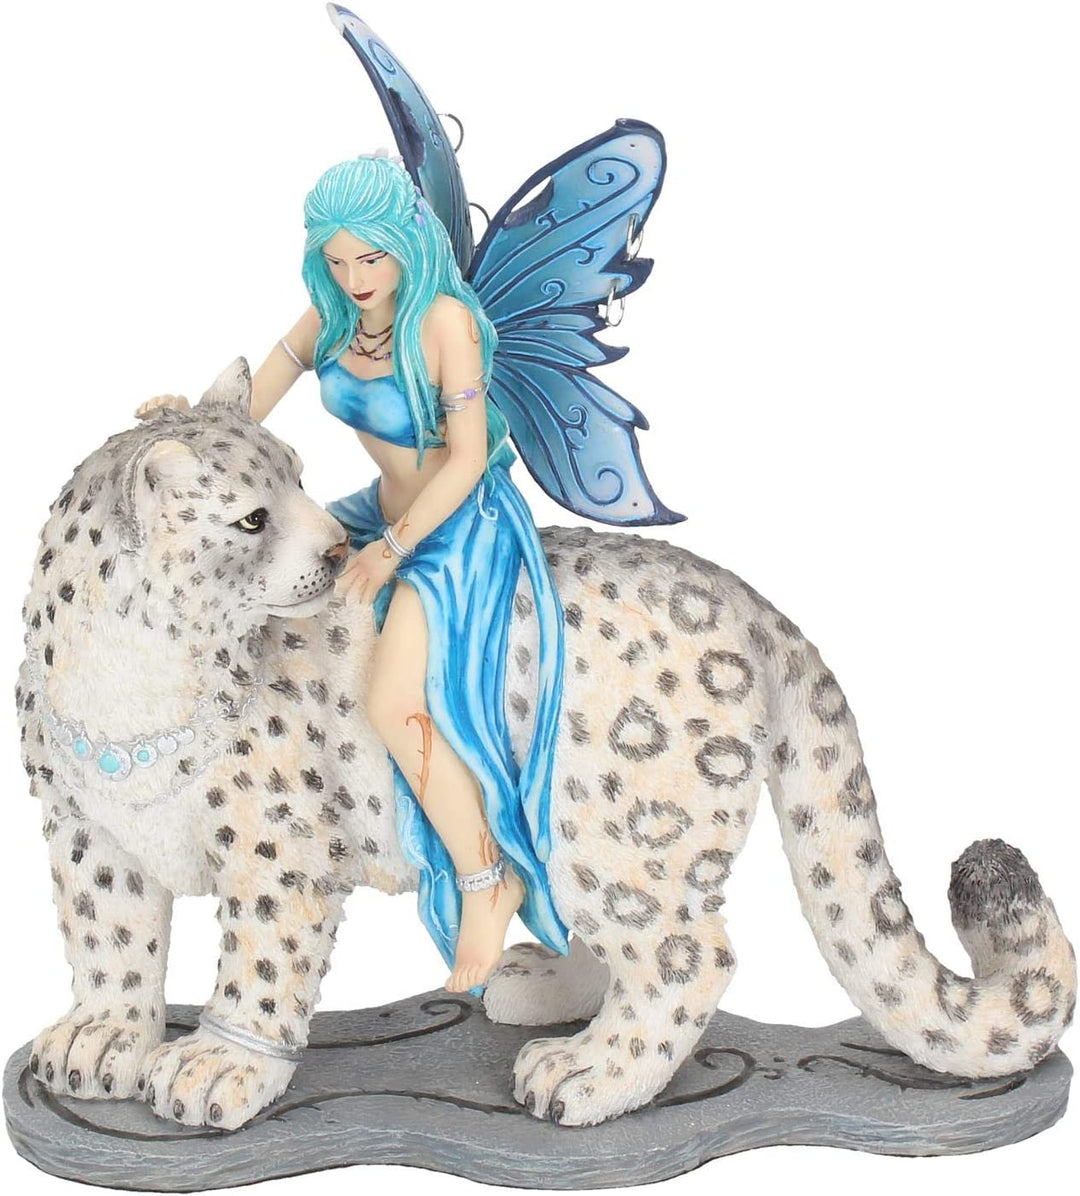 Nemesis Now B1937F6 Hima Companion Fairy Figurine 26cm Blue